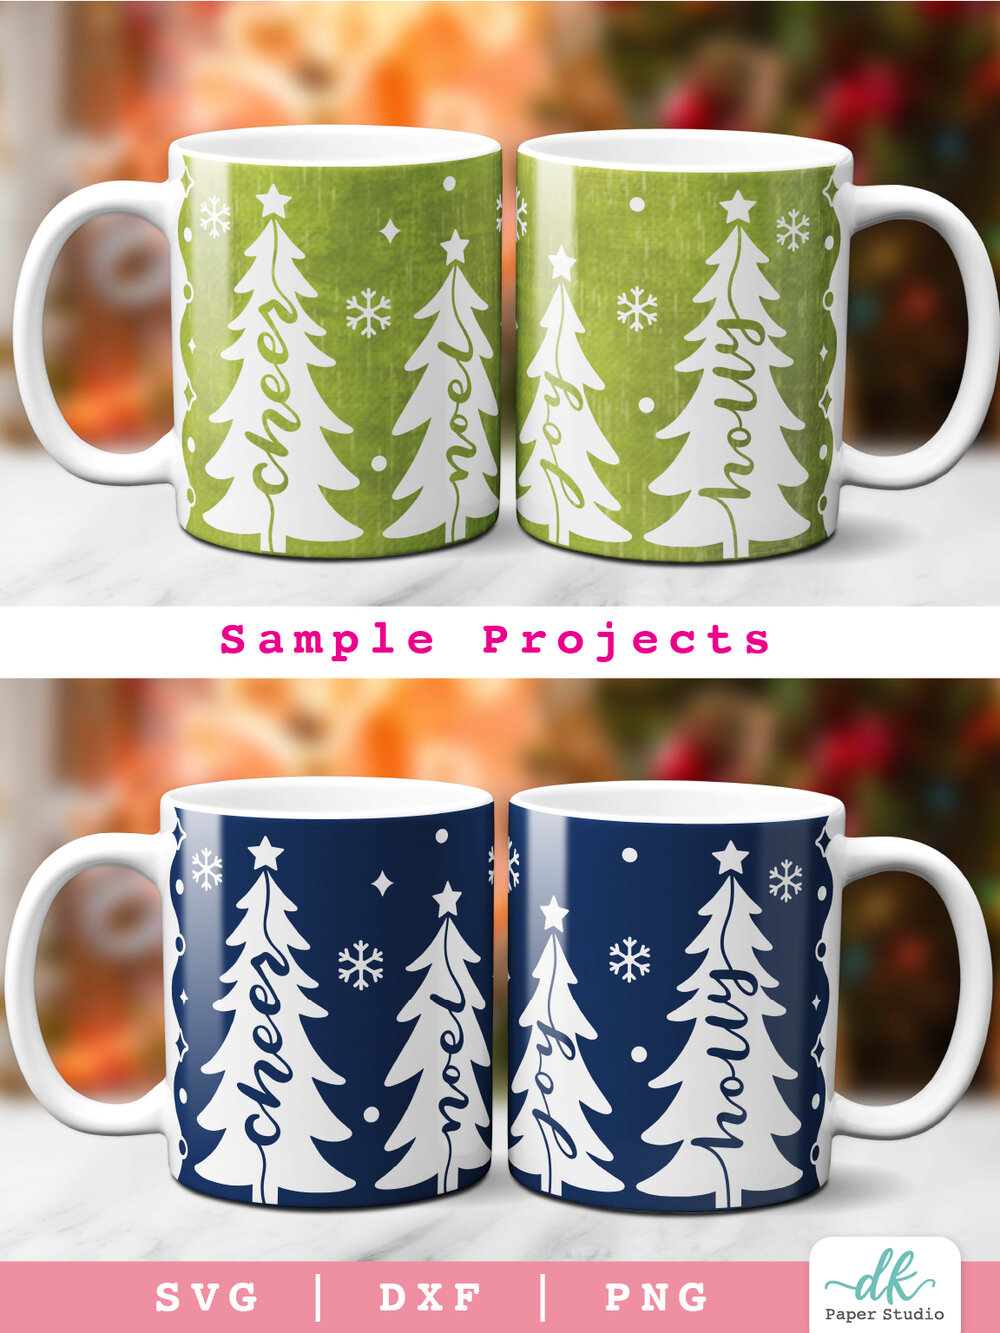 How To Make A Coffee Mug With Cricut (Free Christmas SVG File) - Simple  Made Pretty